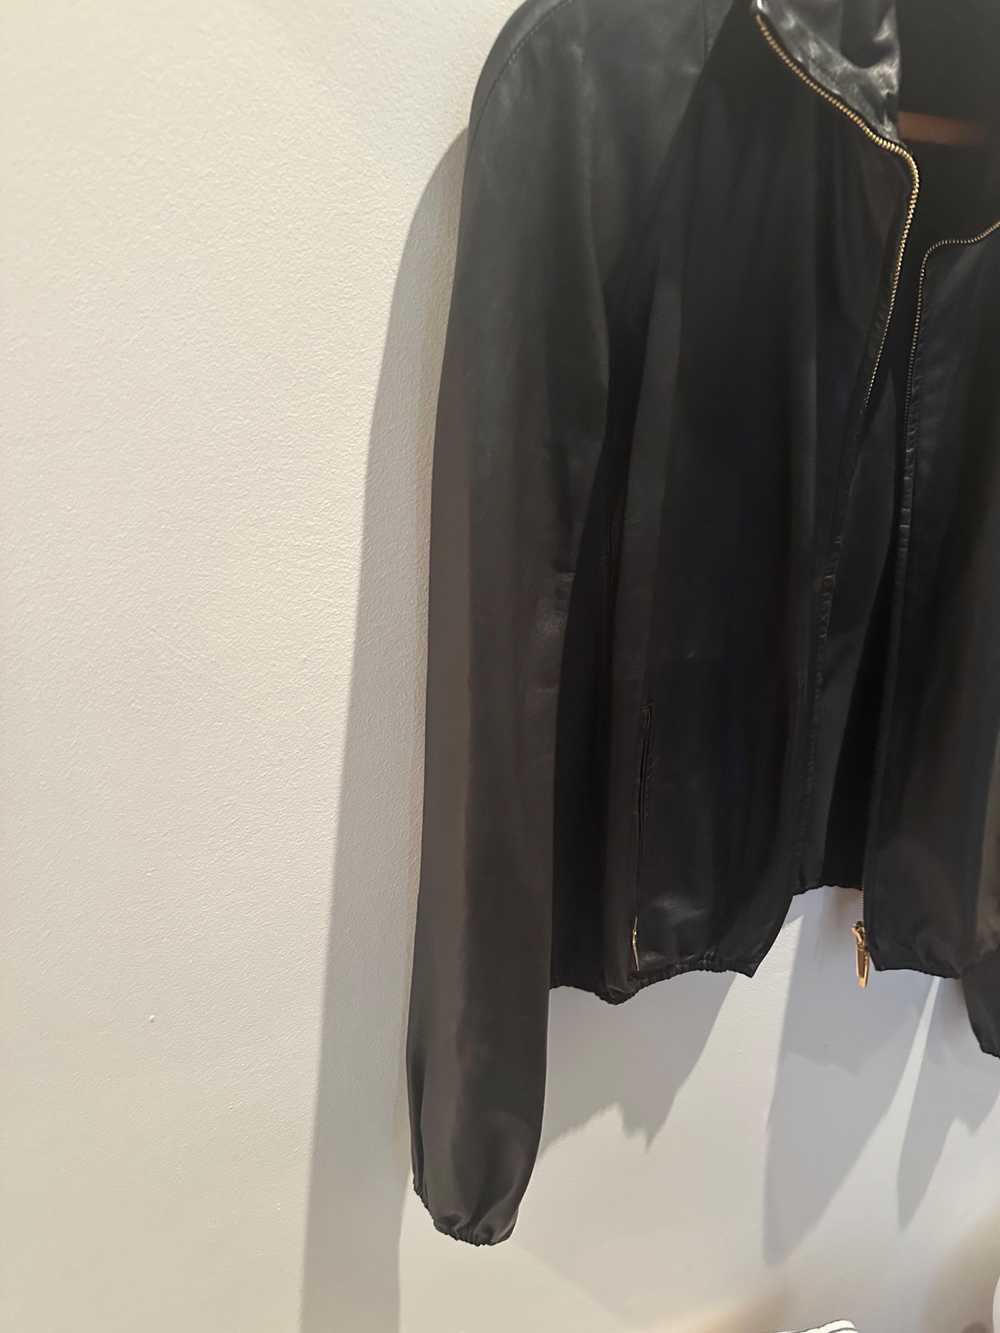 Product Details Gucci Black Leather Bomber Jacket - image 4